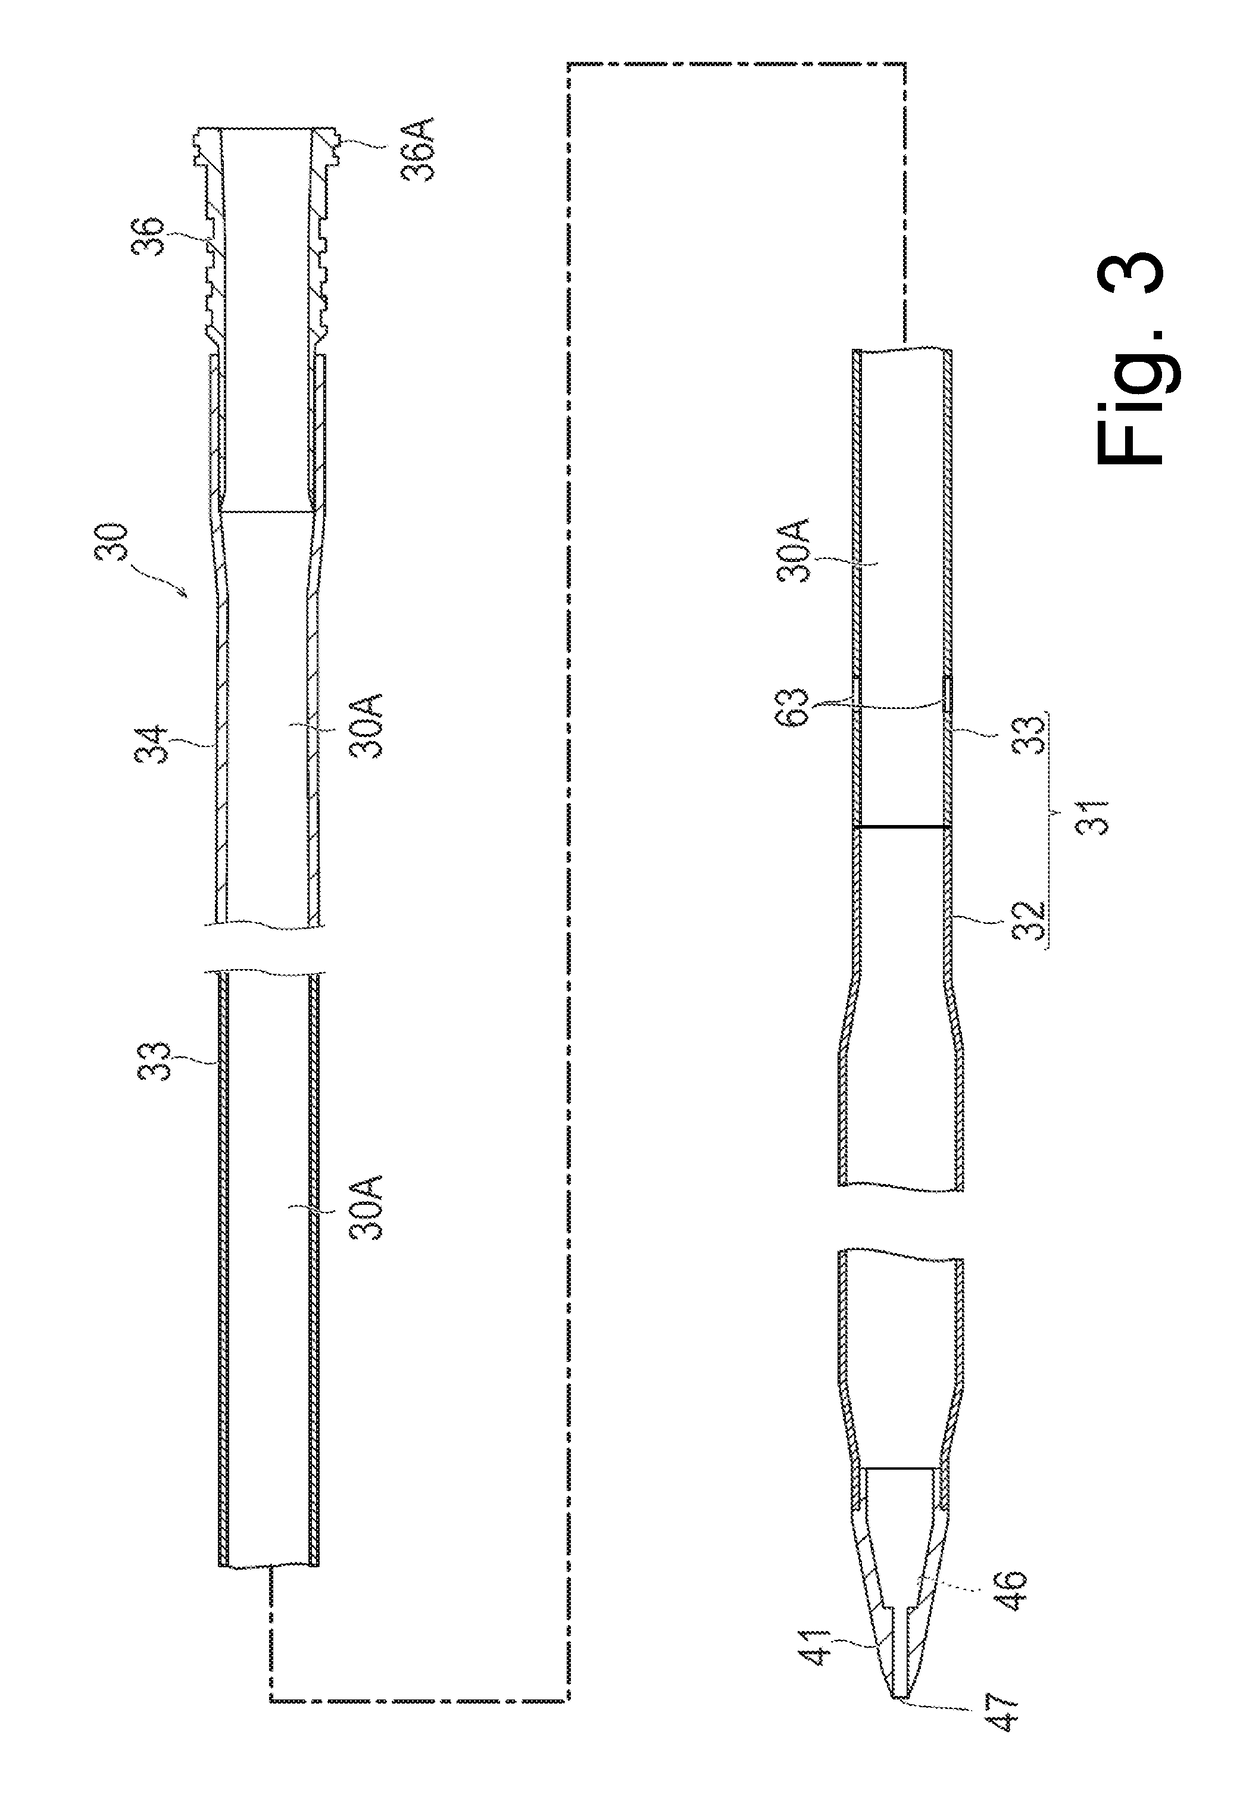 Percutaneous catheter and method of manufacturing tube for percutaneous catheter